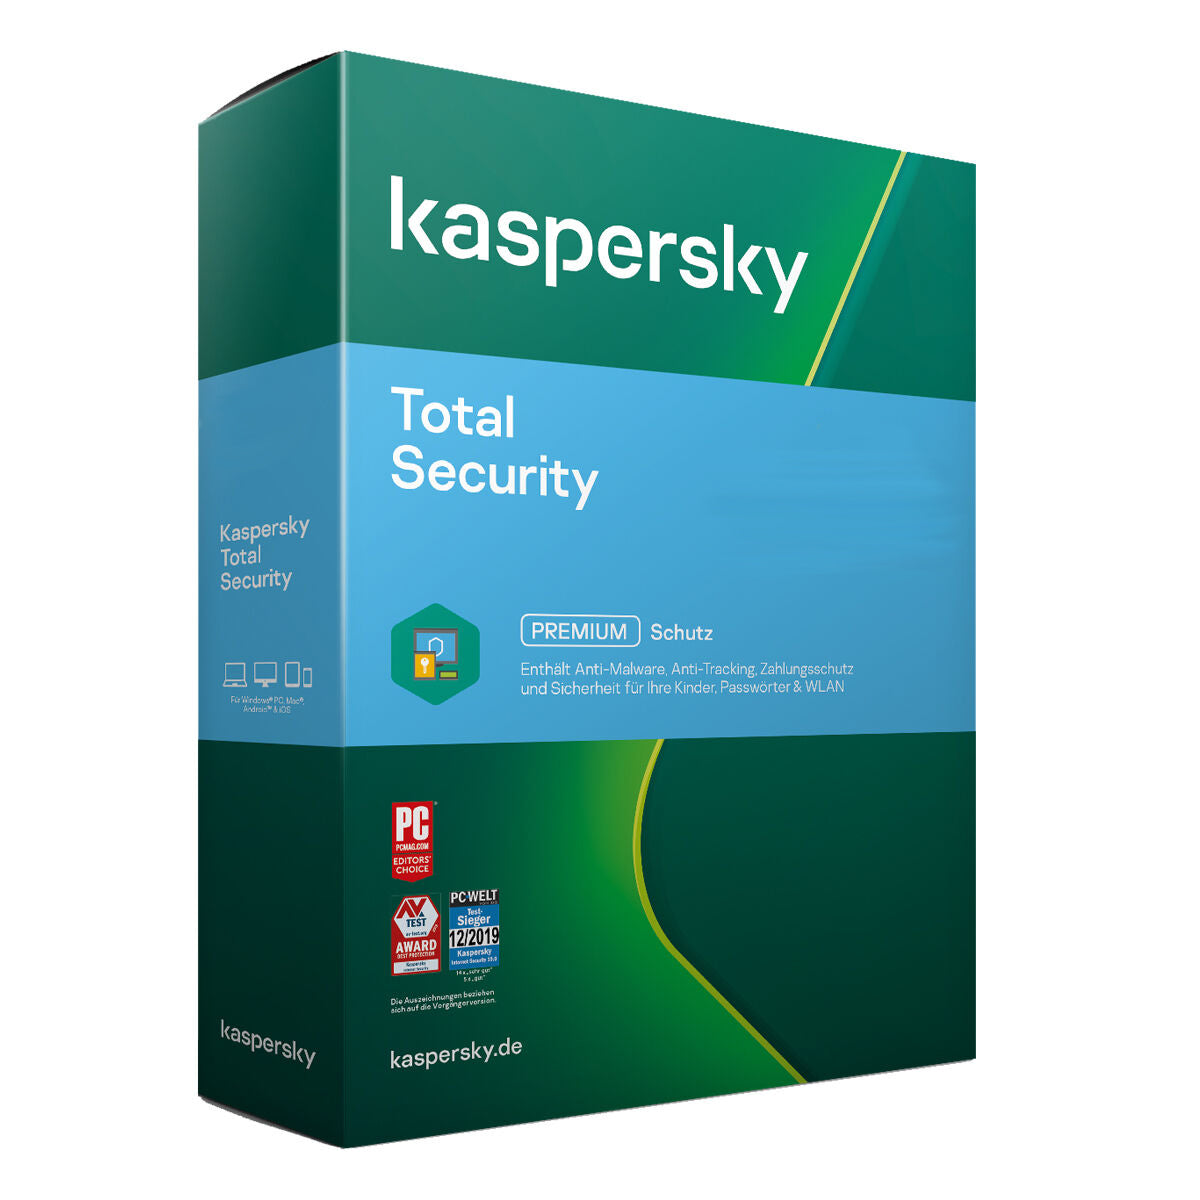 Produktbox von Kaspersky Total Security